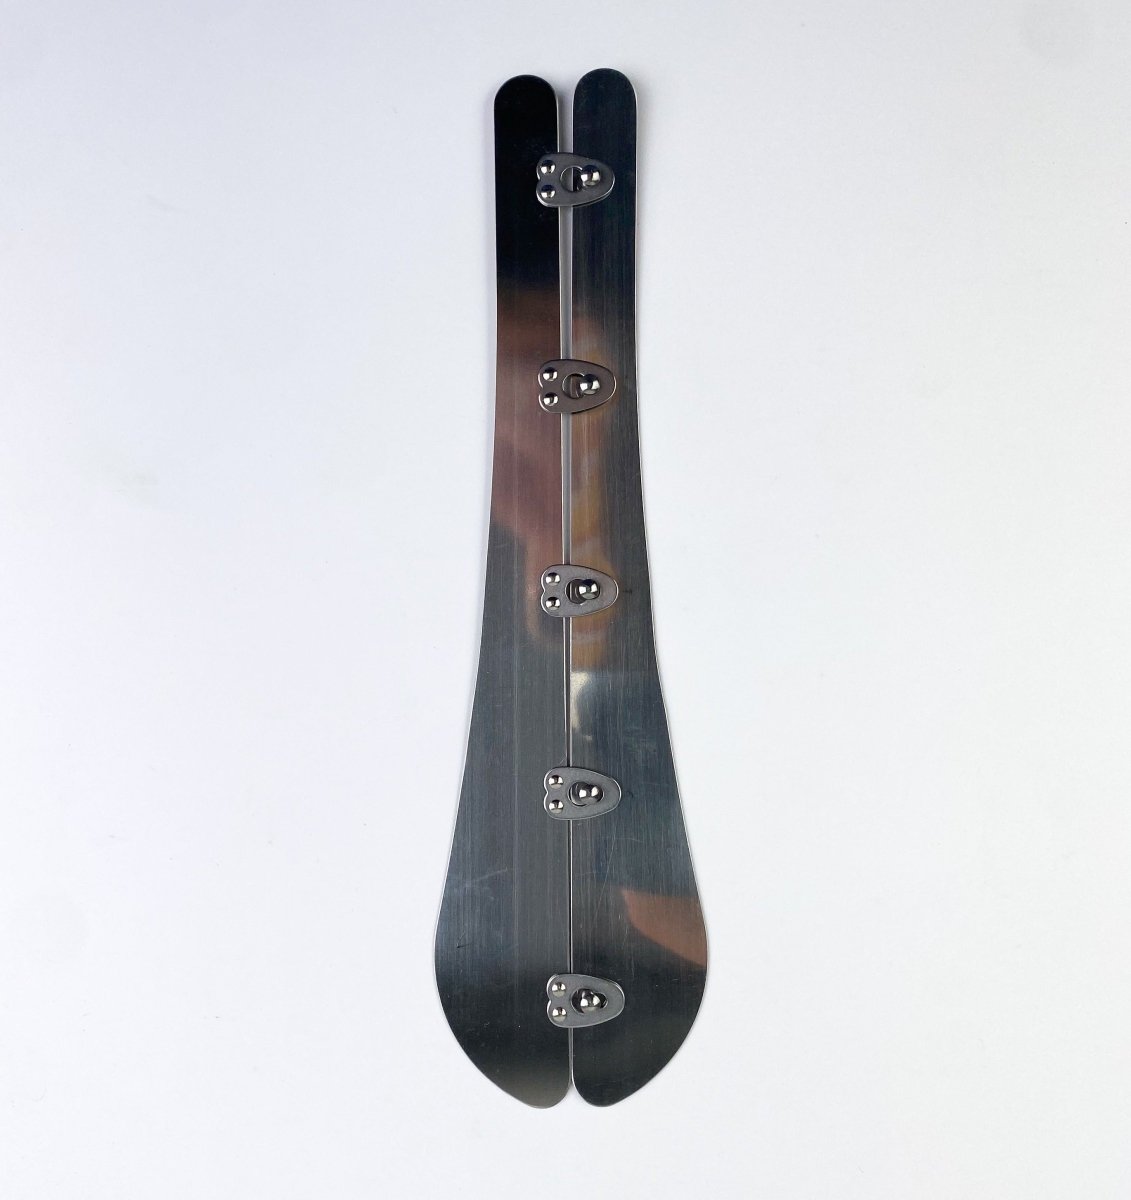 Corset Spoon Busk - Silver Bone with Silver Clip - various lengths